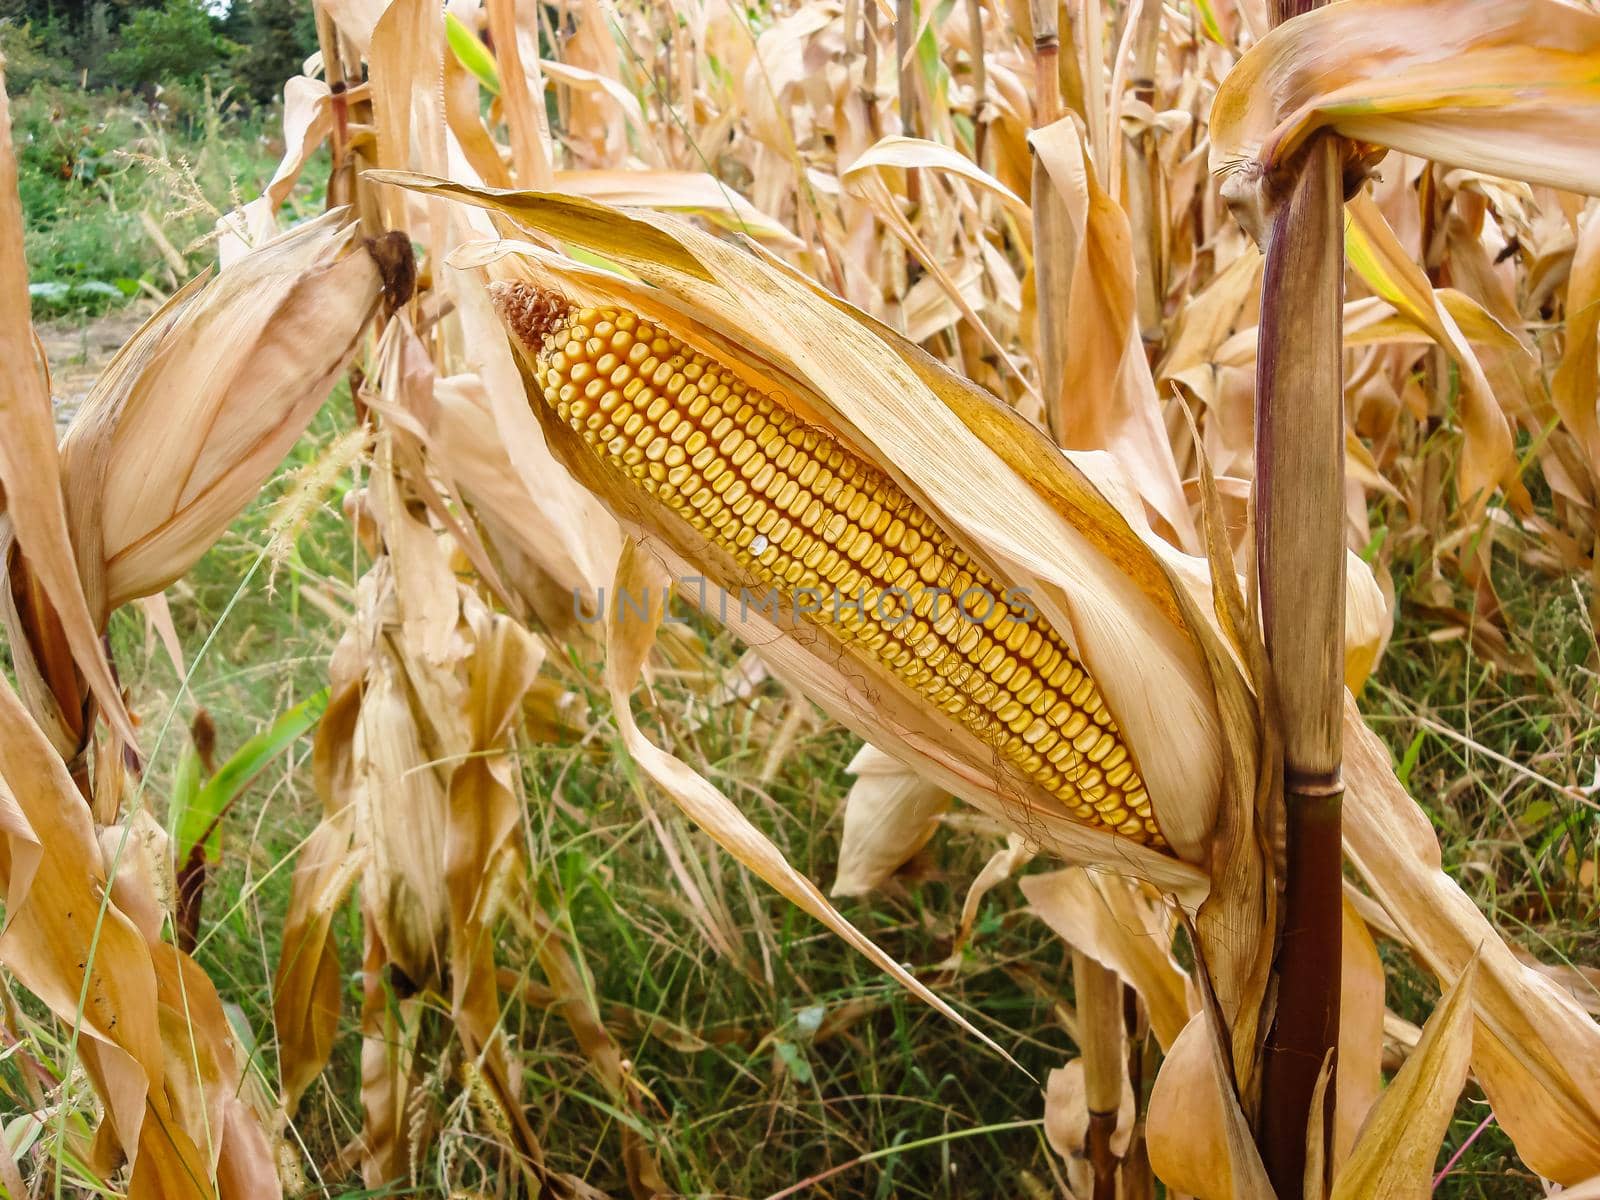 Dry corn field, dry corn stalks, end of season. by vladispas